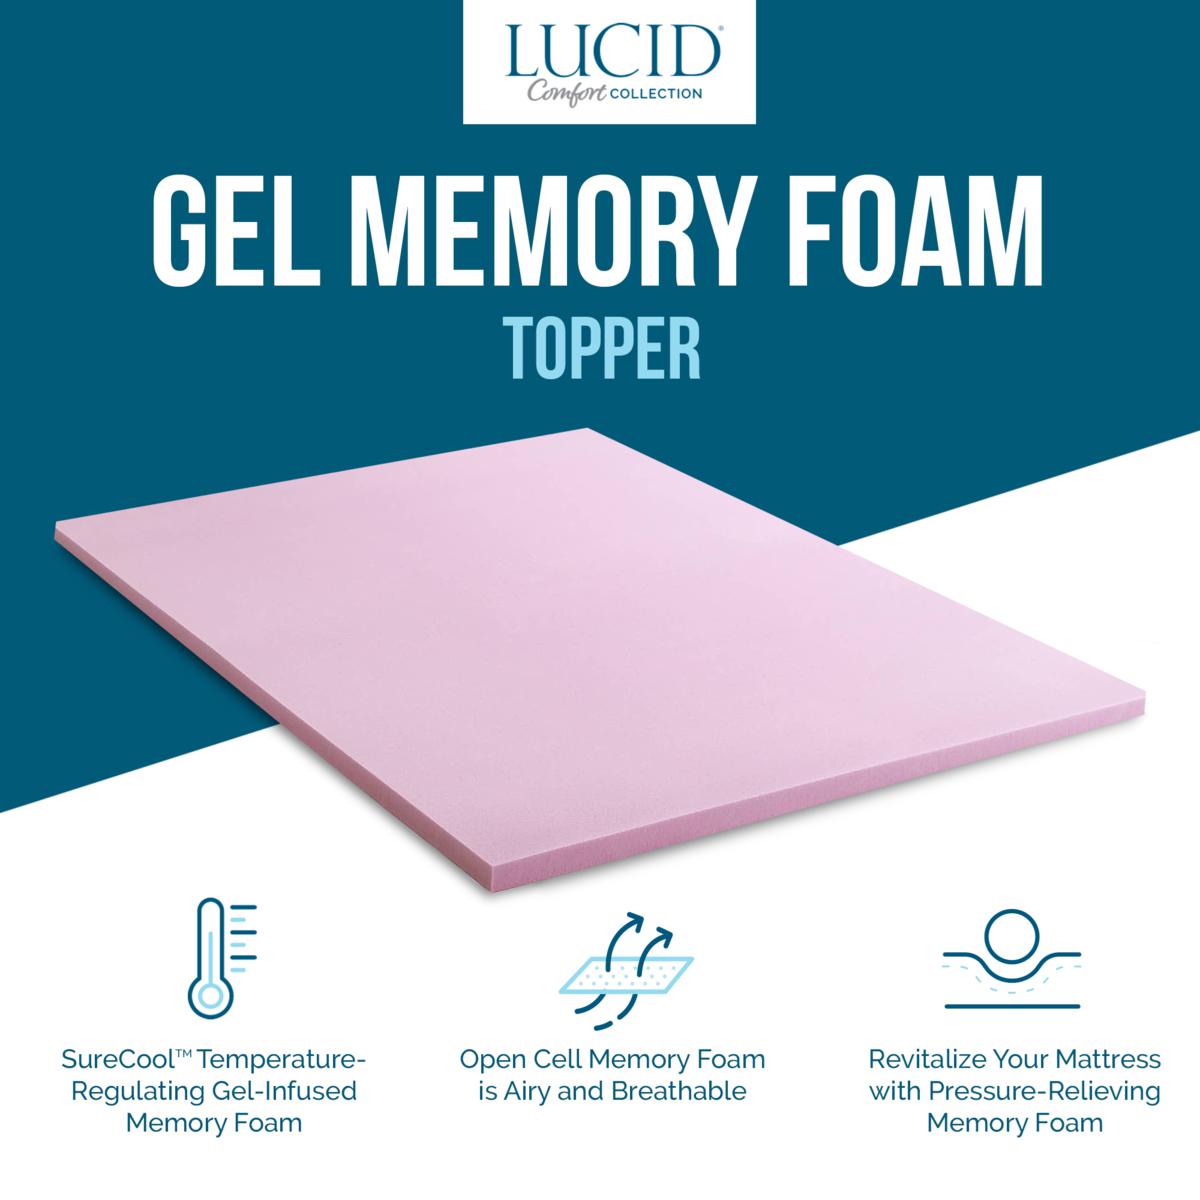 LUCID Comfort Collection 3 Lavender Memory Foam Topper - Queen